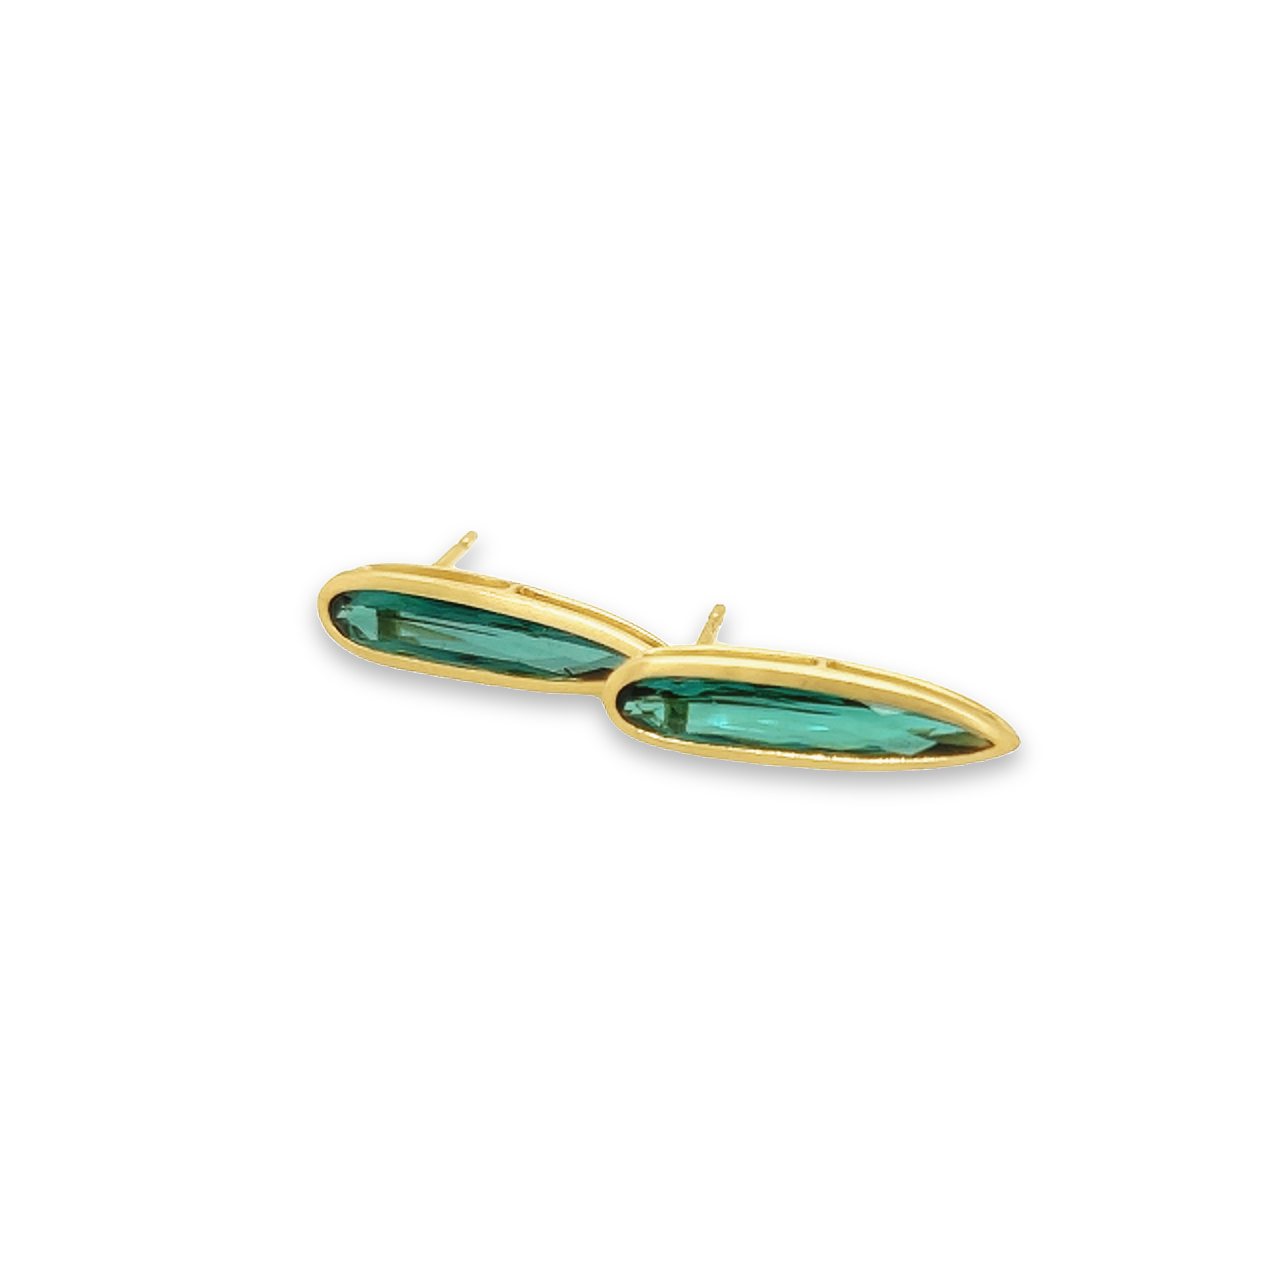 Featured image for “Stunning Green Tourmaline  Teardrop Earrings”